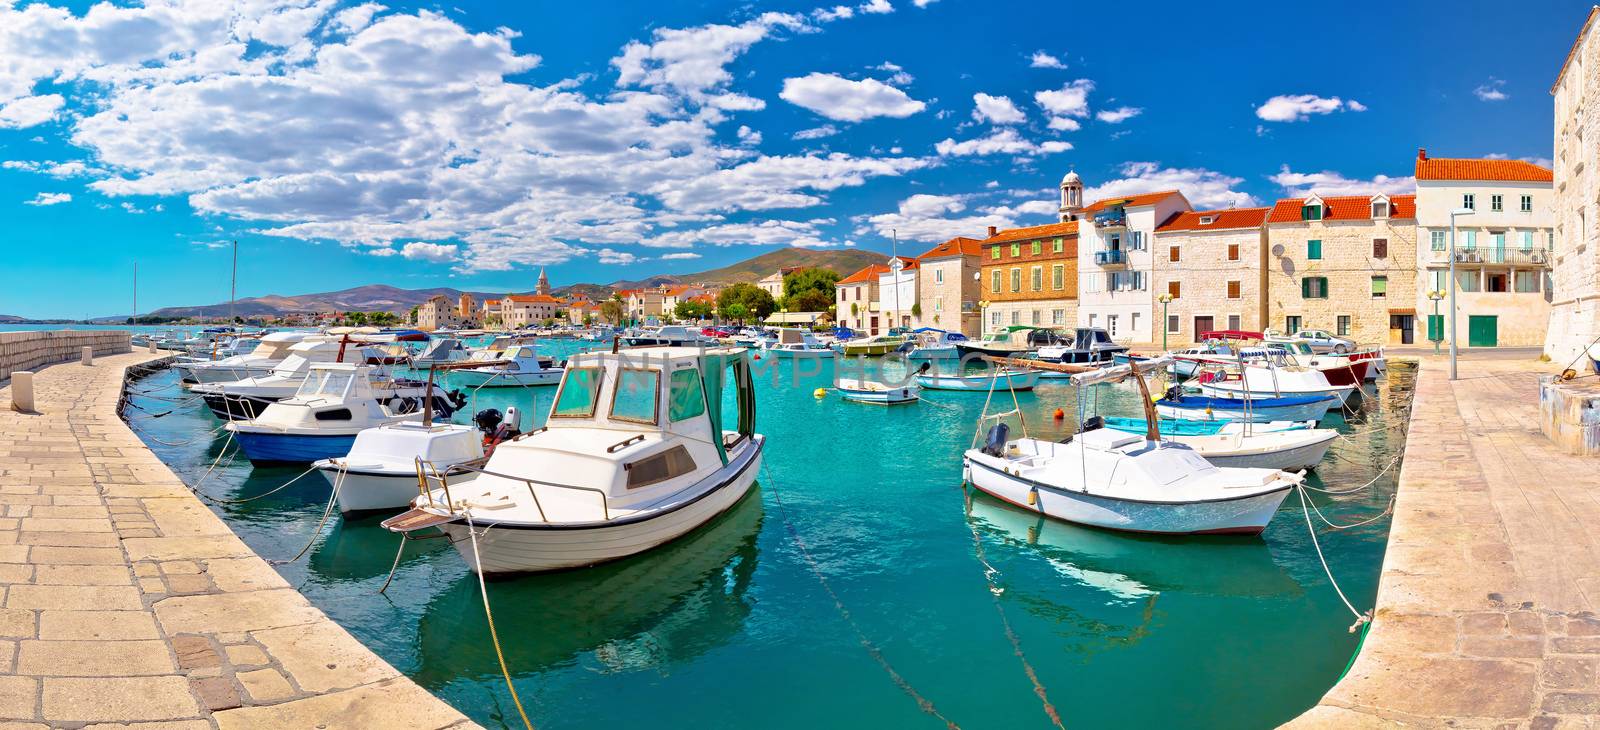 Kastel Novi turquoise harbor and historic architecture panoramic view, Split region of Dalmatia, Croatia